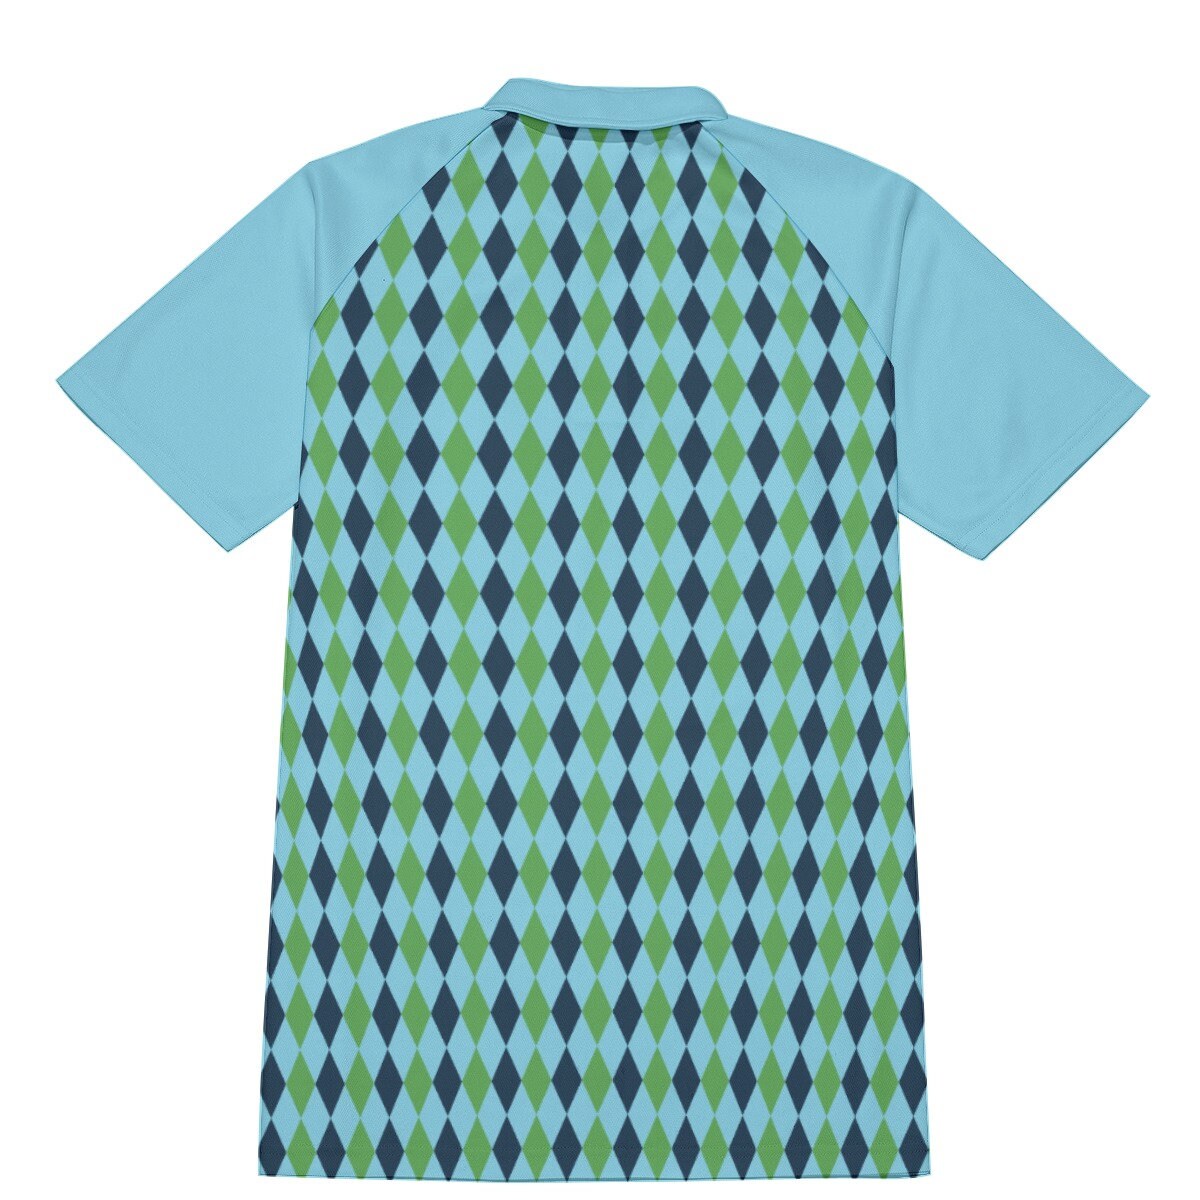 Polo Shirt, Blue Polo Shirt, Men's Vintage Shirt, Vintage polo shirt, 60s style Top, 60s style shirt, Men's knit top, Retro shirt men